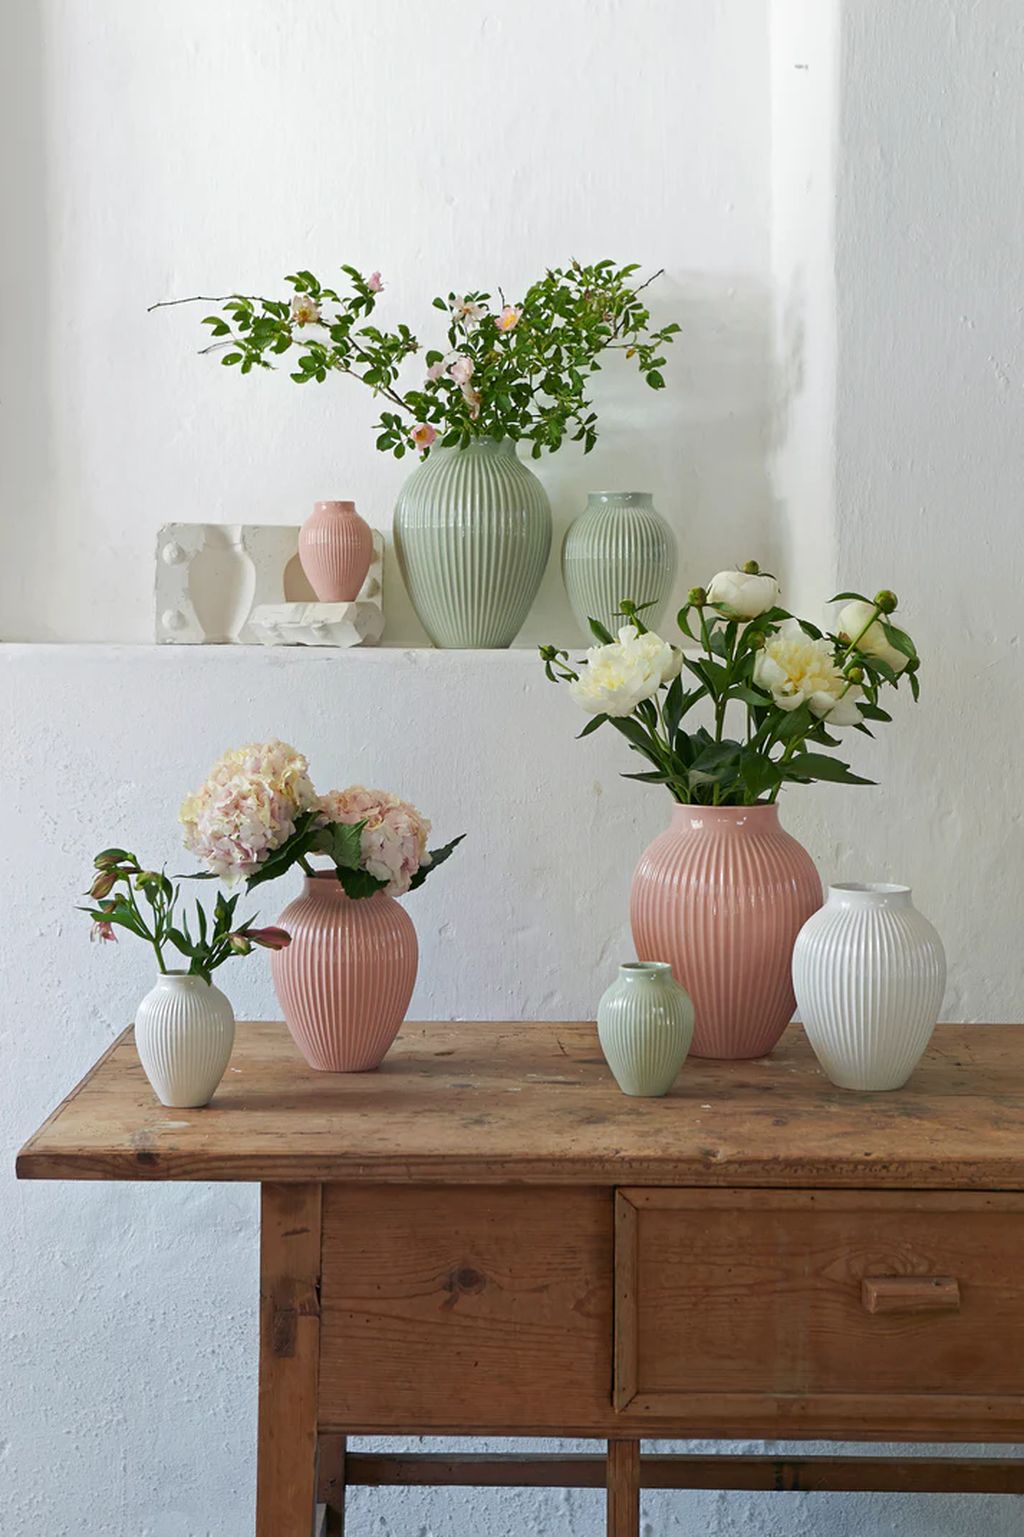 Knabstrup Keramik Vaas met groeven H 27 cm, roze